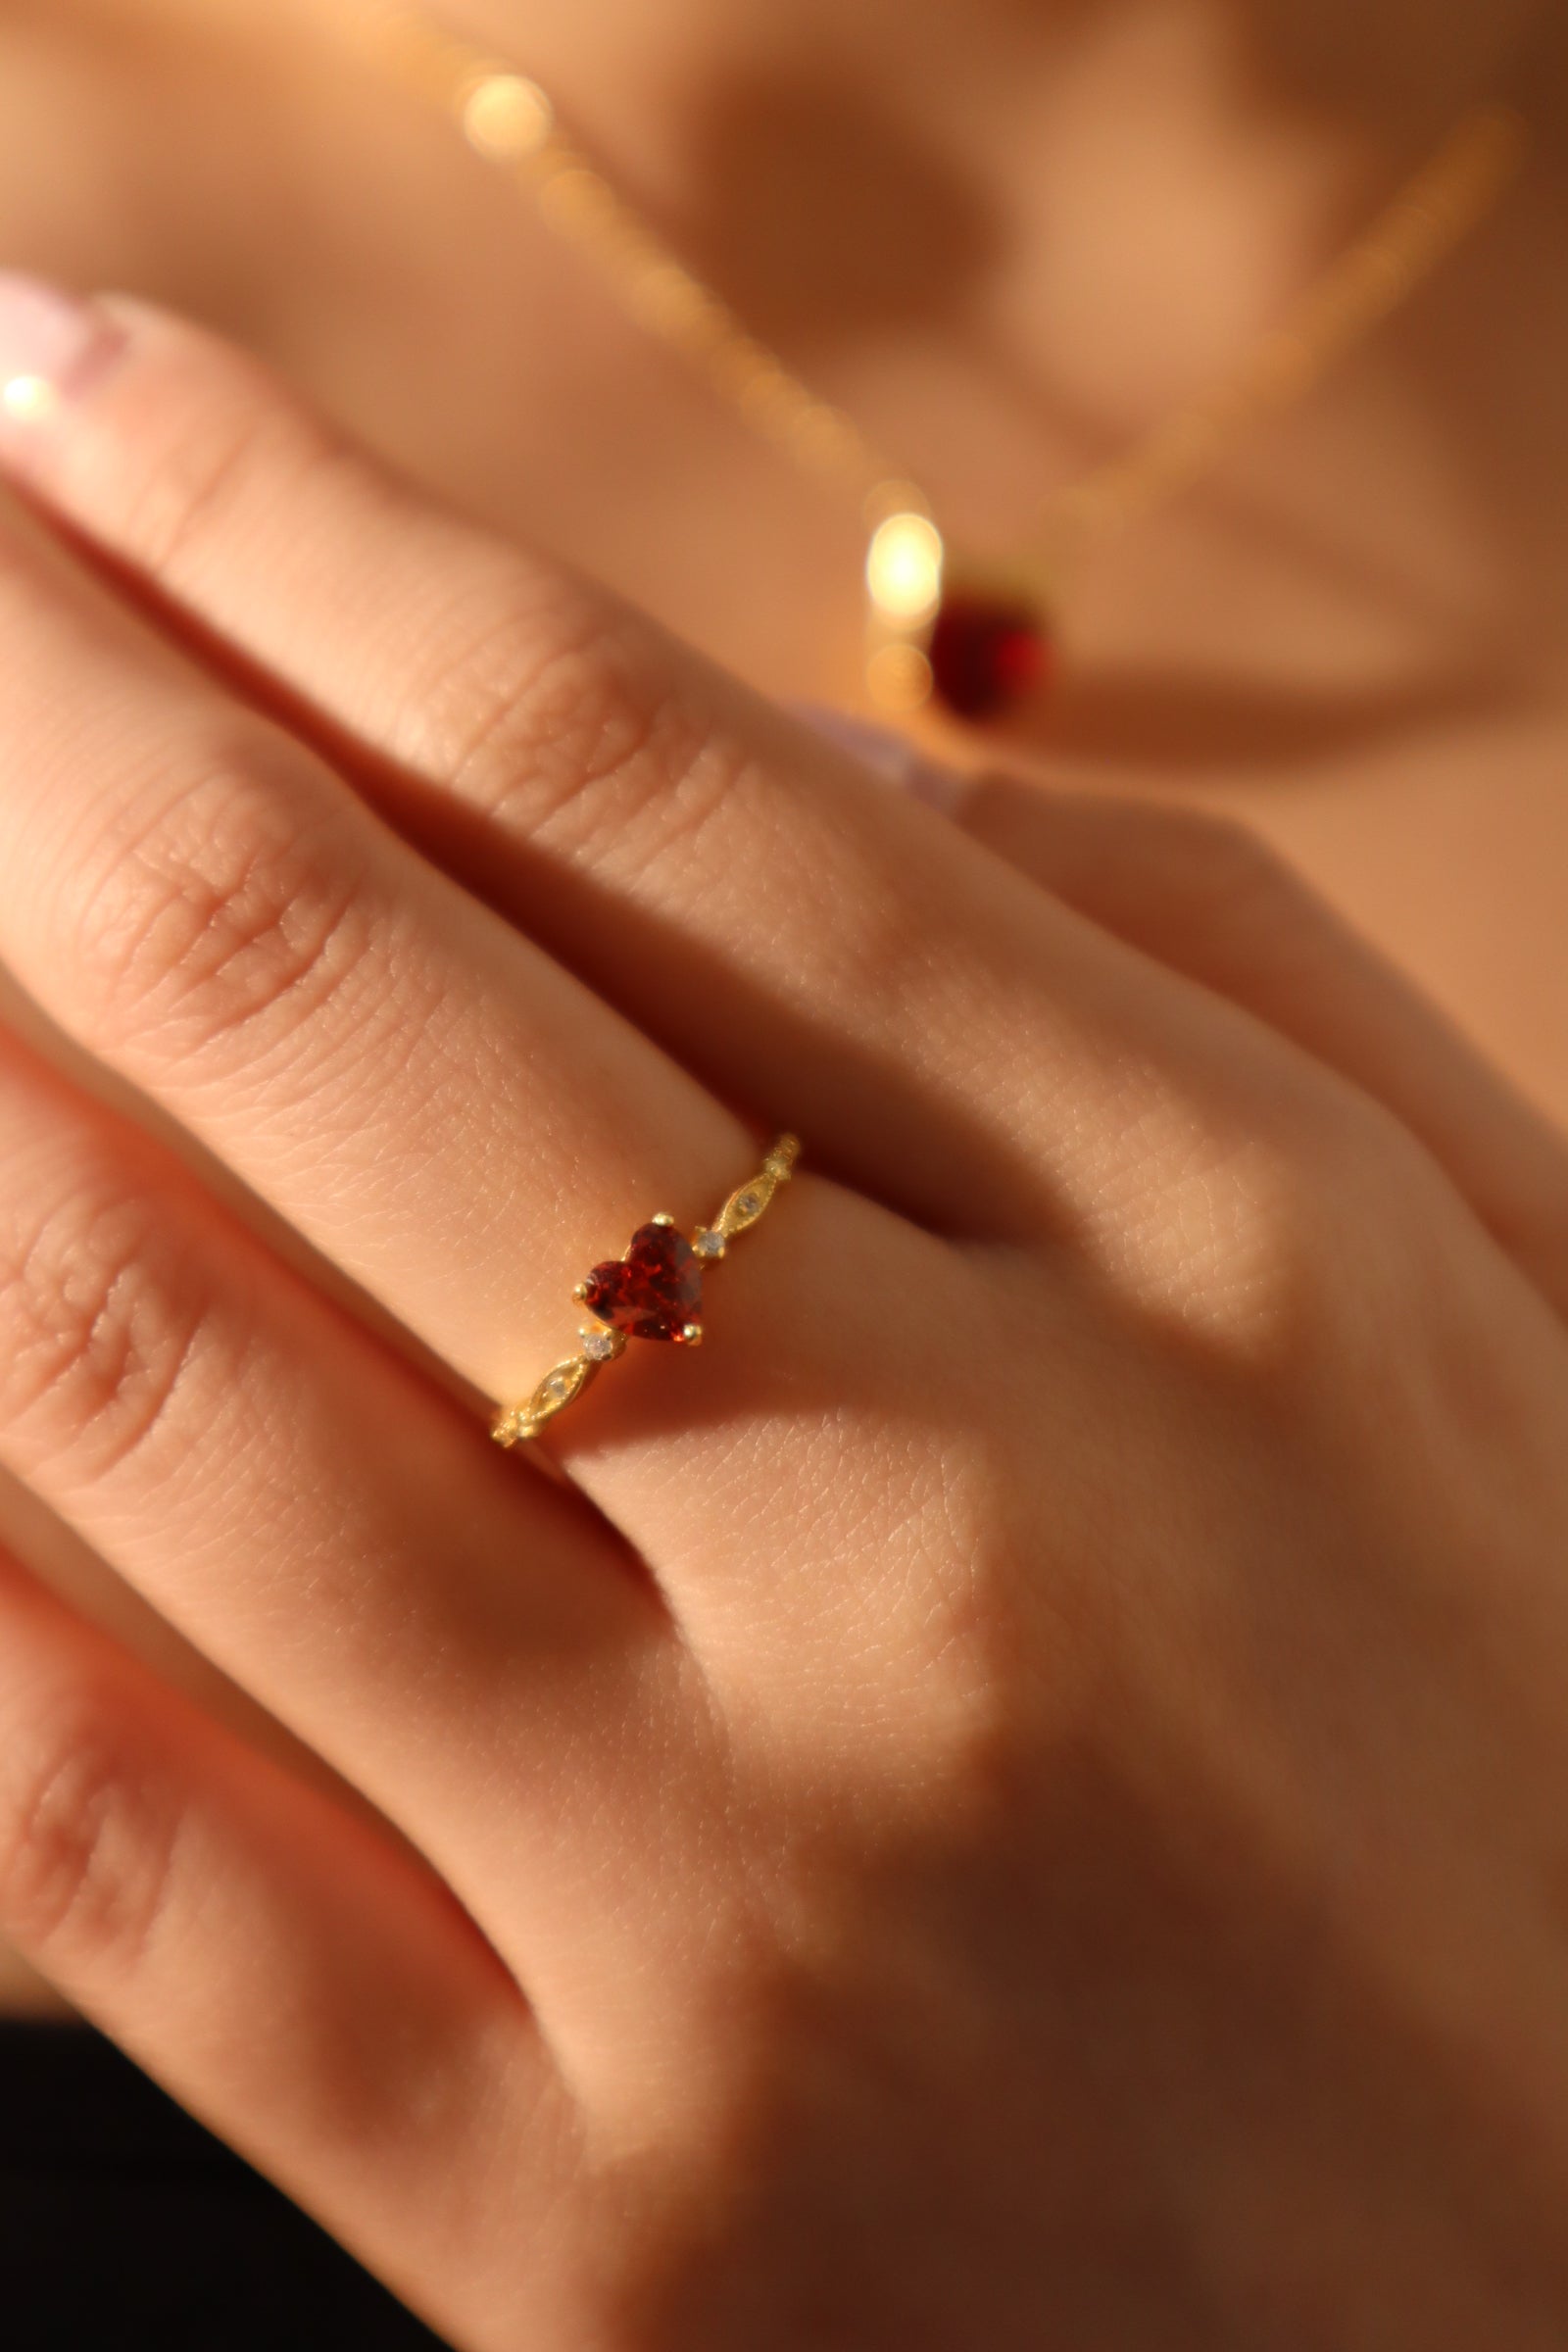 24k Yellow Gold Dragon Band Ring Size 7.75 | eBay